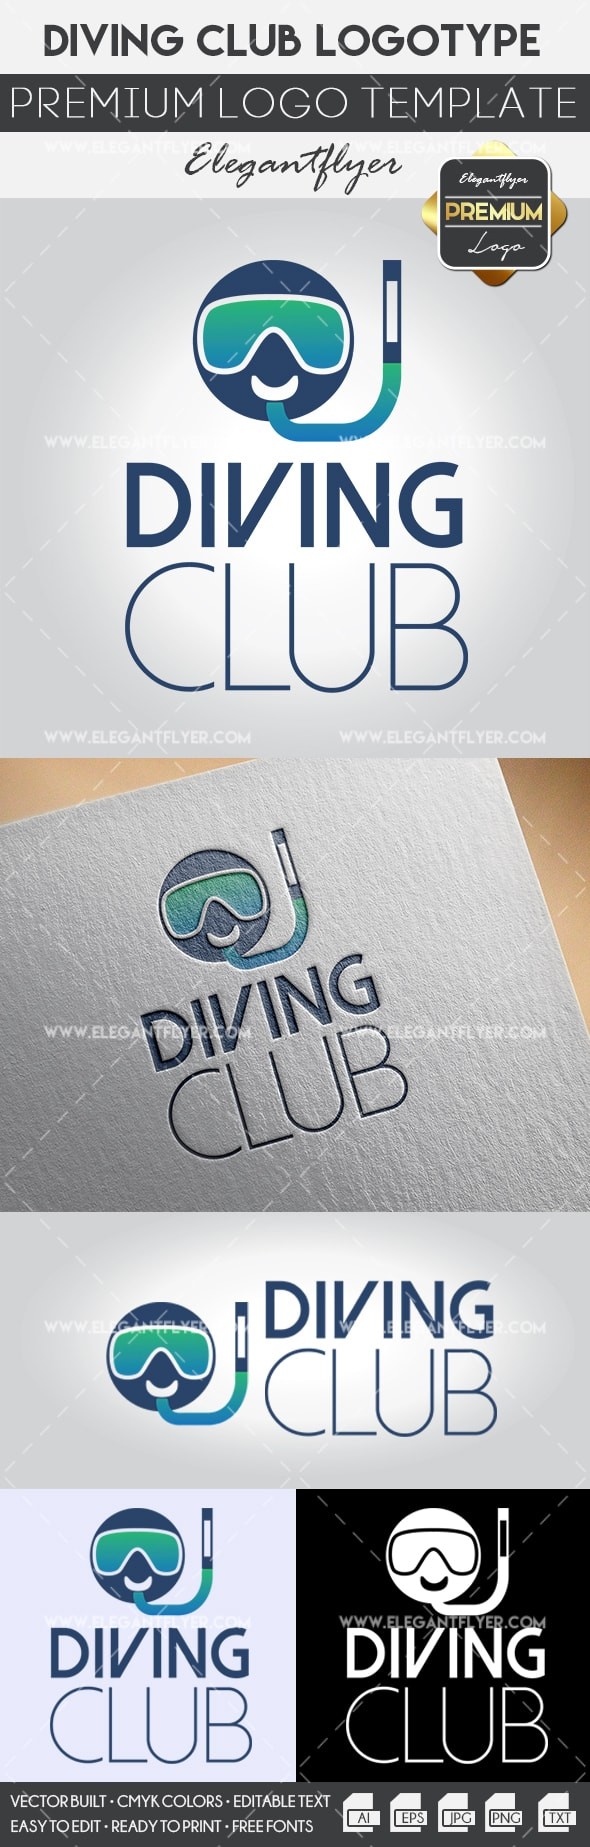 Diving Club by ElegantFlyer